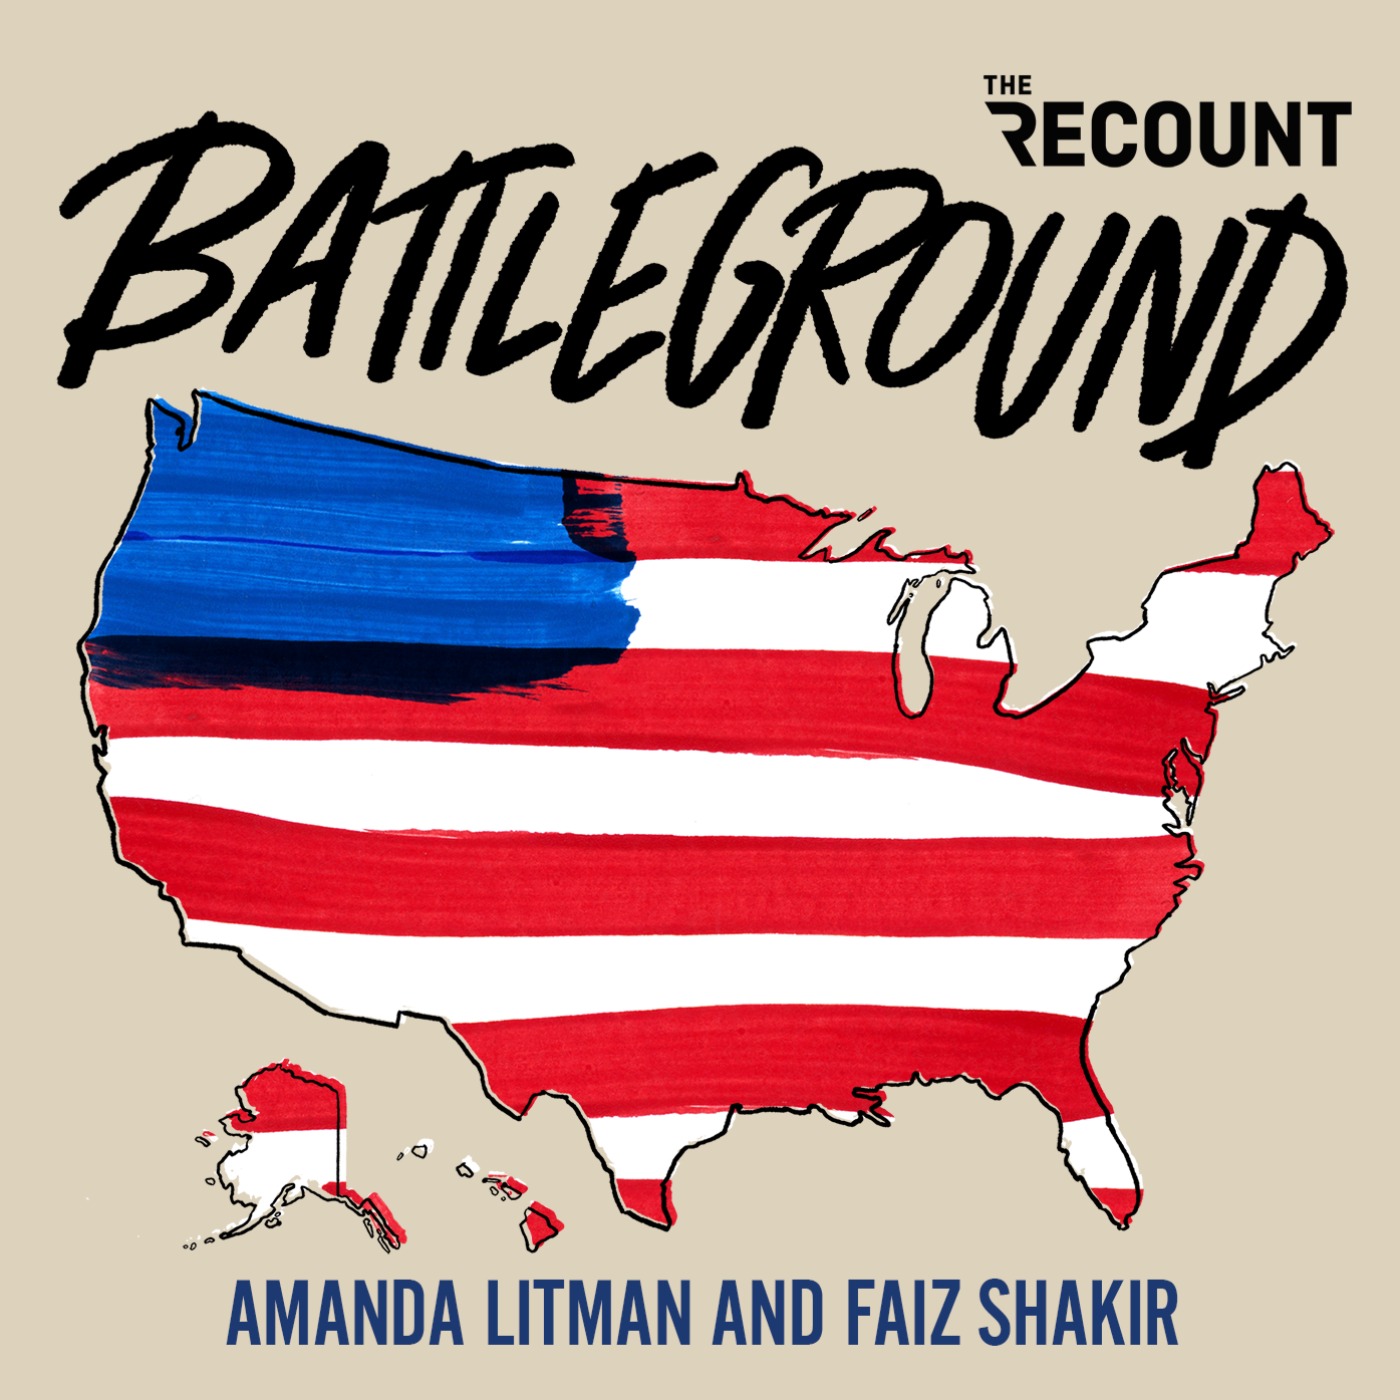 Battleground with Amanda Litman and Faiz Shakir podcast show image